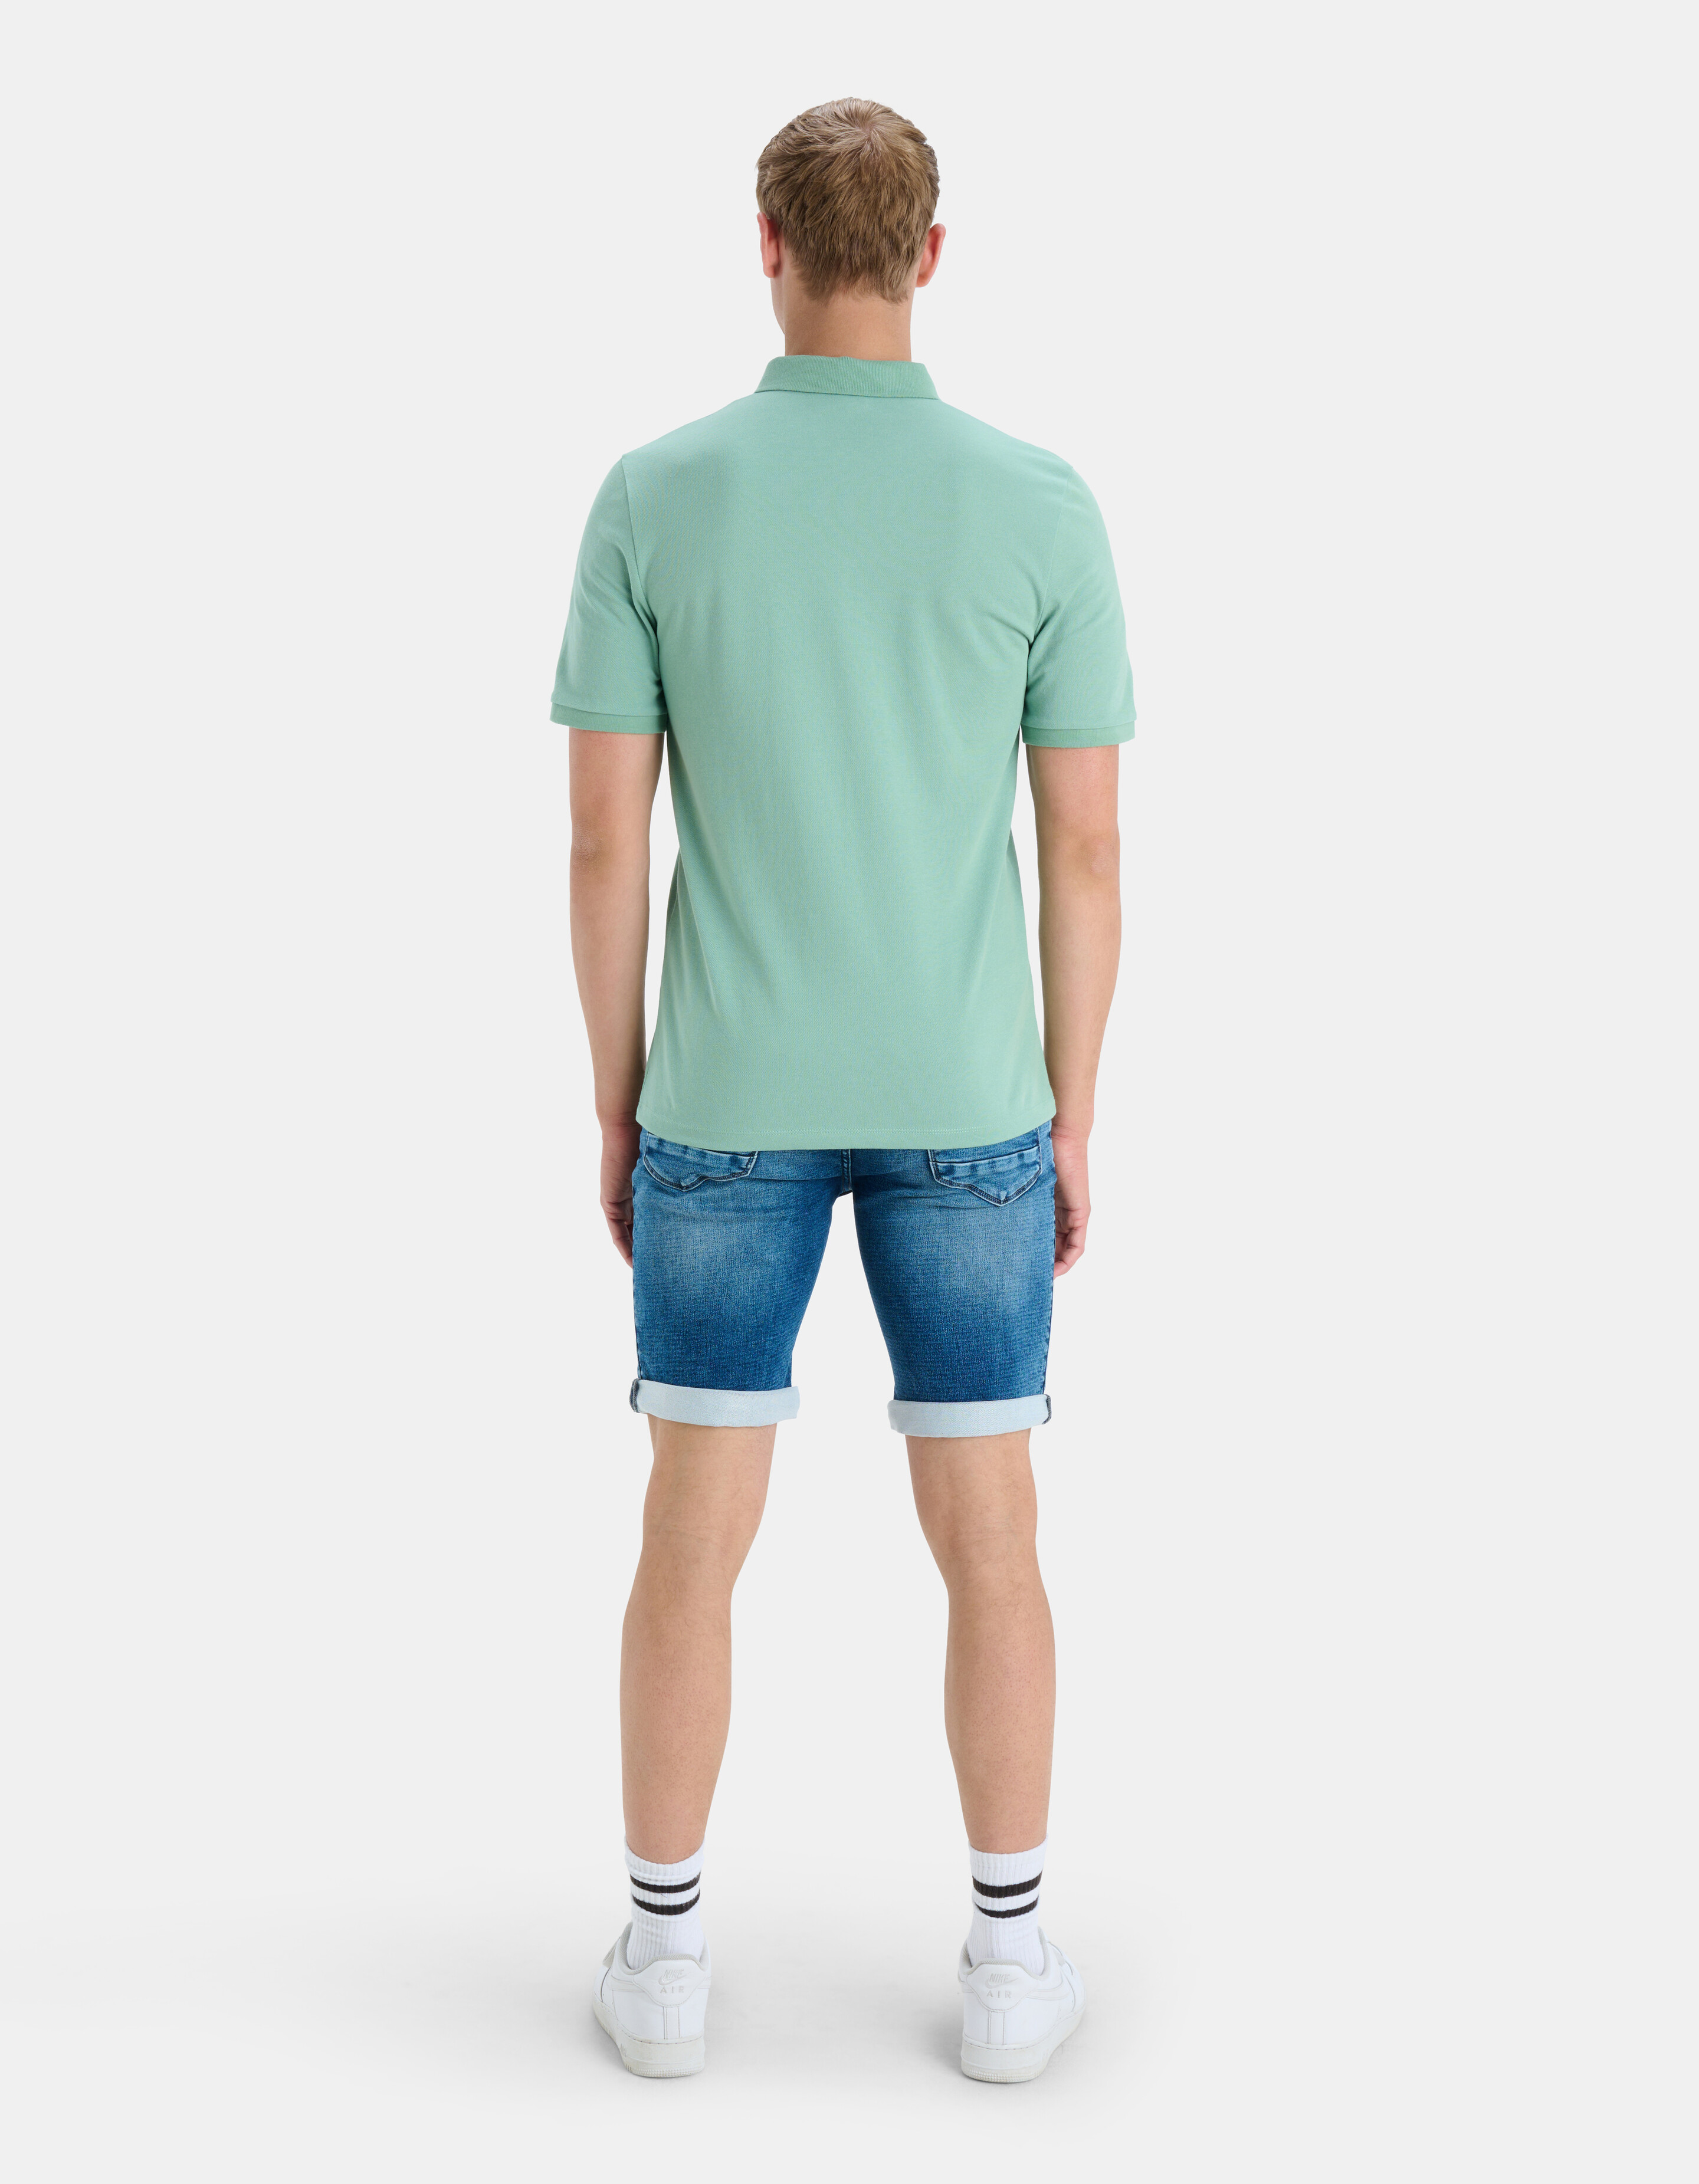 Premium Polo Shirt REFILL